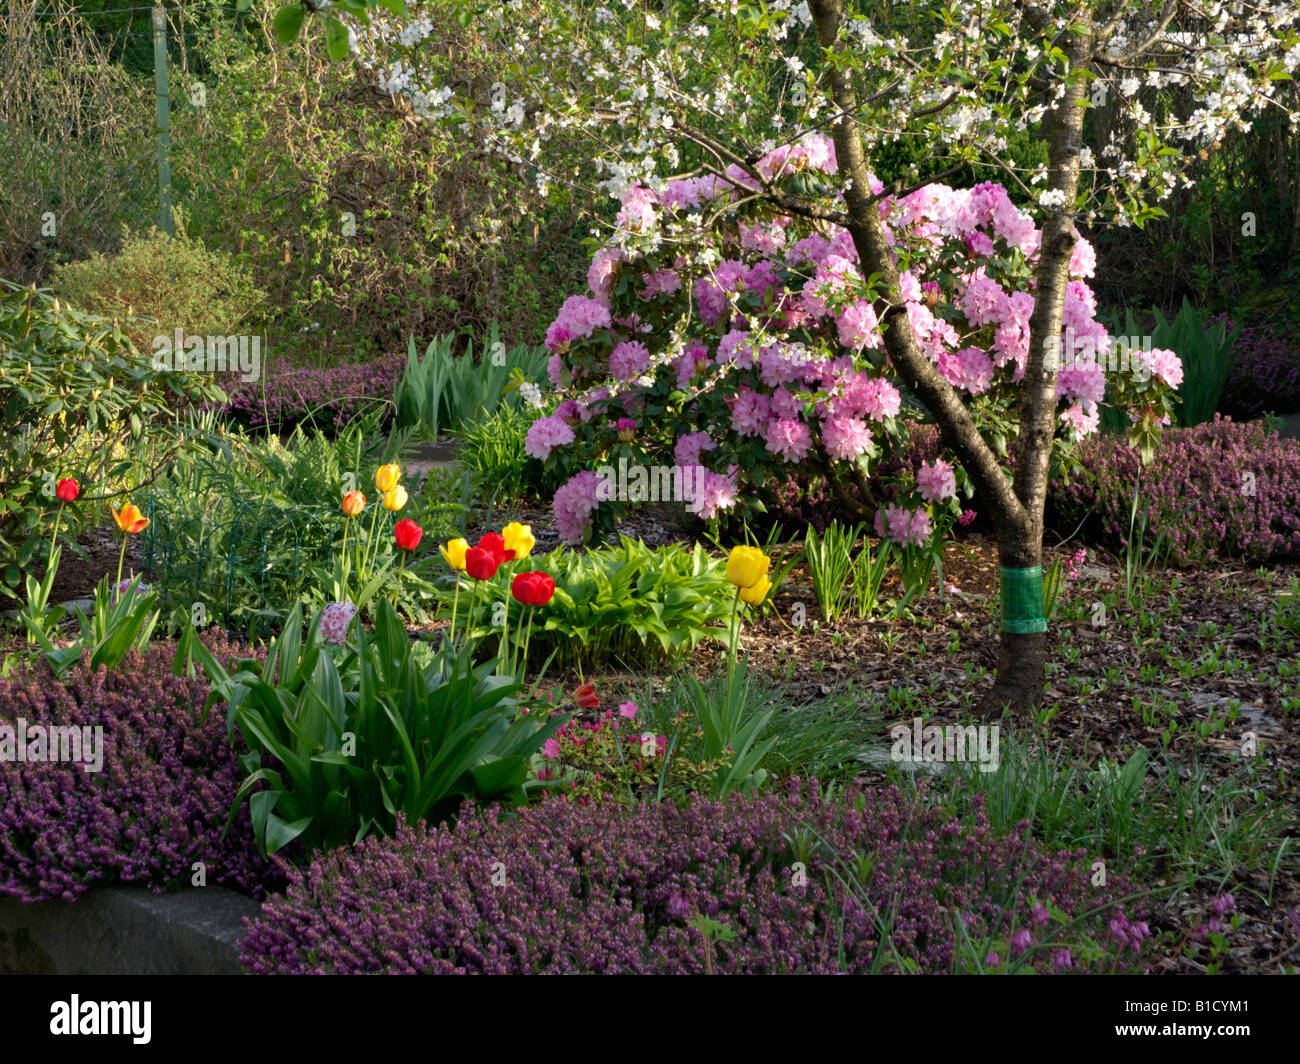 Rhododendron (Rhododendron), tulip (Tulipa) and winter heather (Erica carnea syn. Erica herbacea) Stock Photo